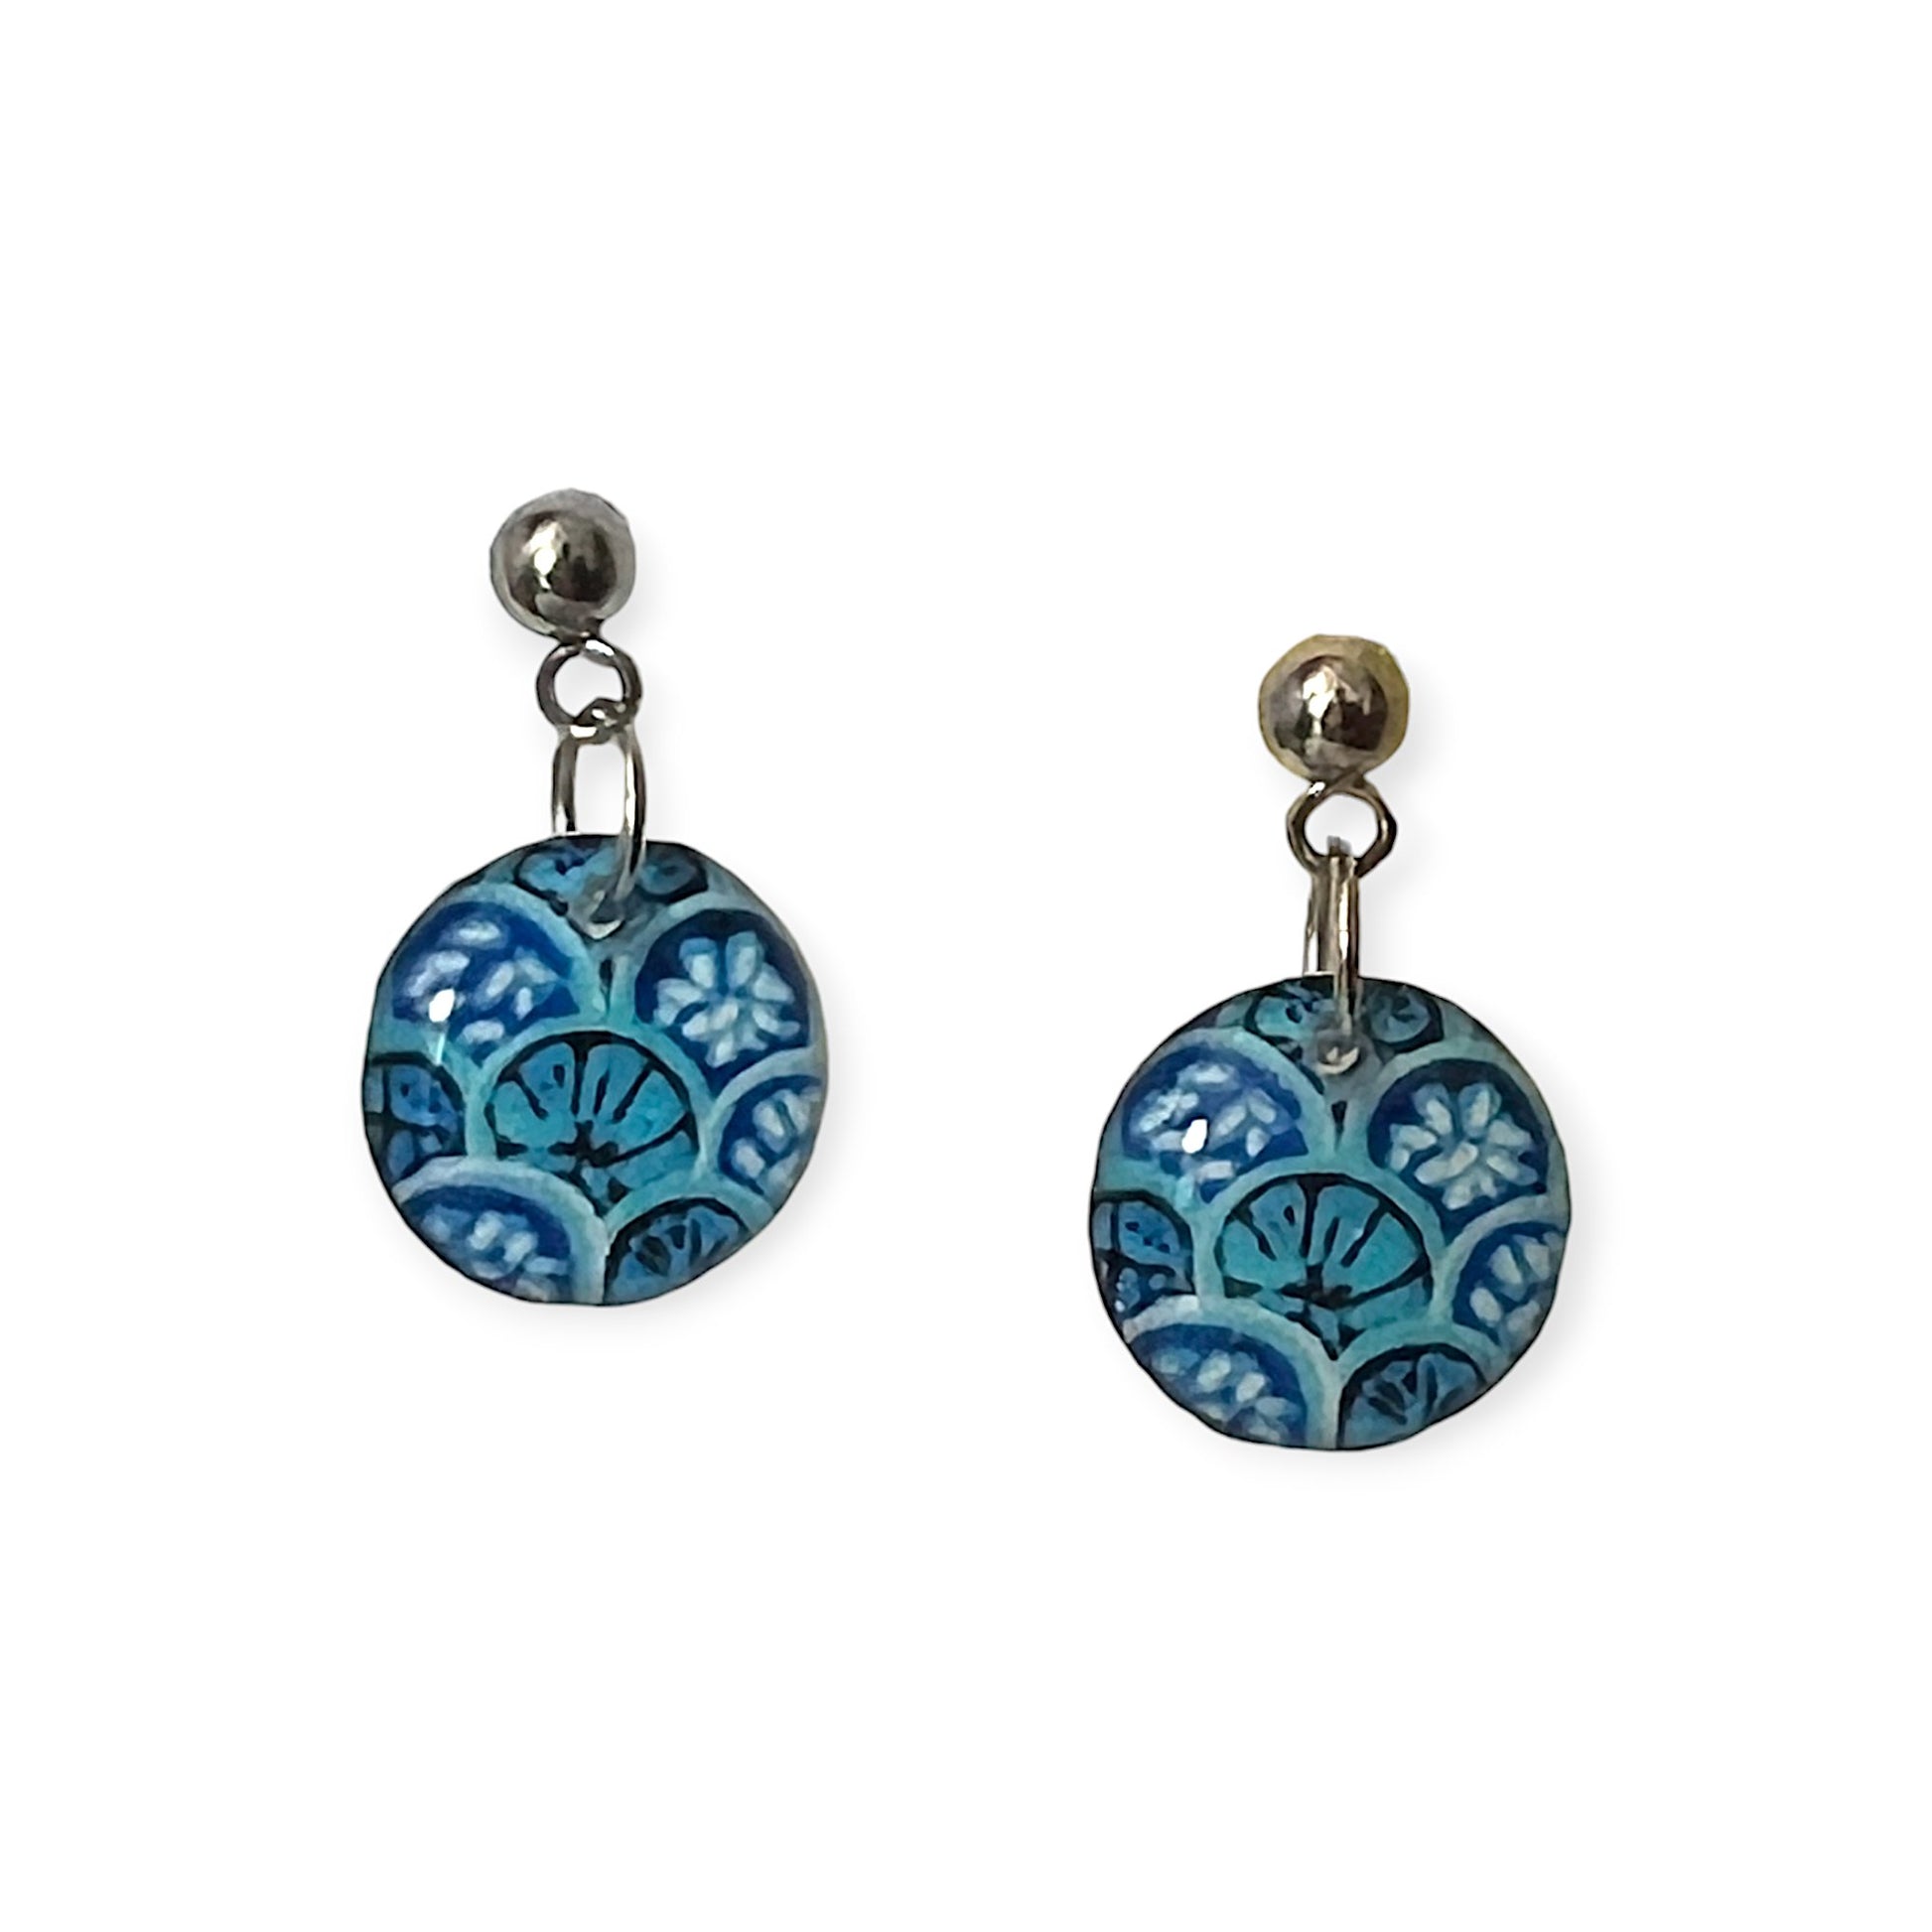 Petite blue designed enamel earrings - Sundara Joon